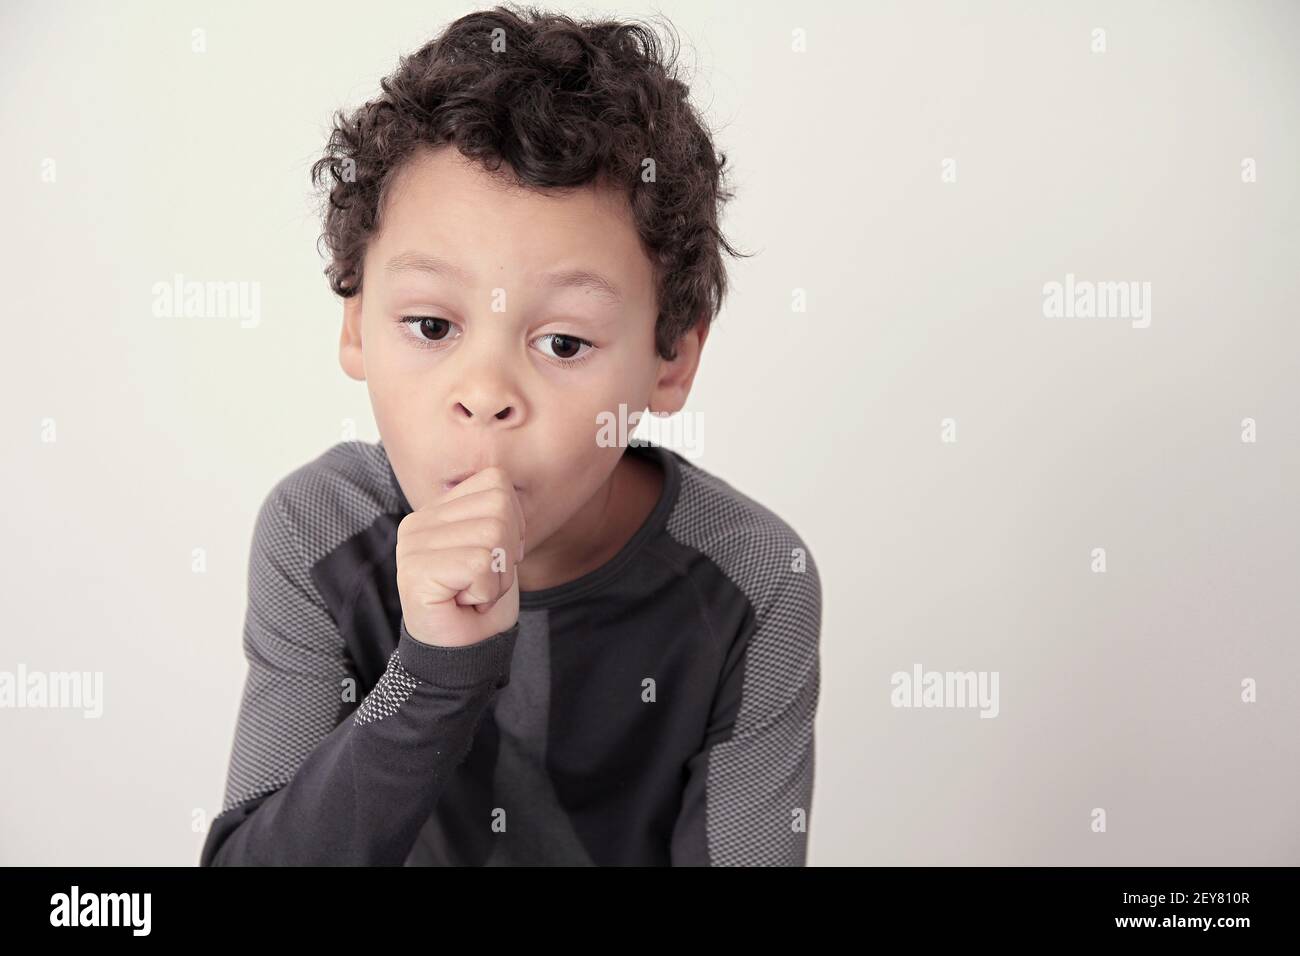 boy sucking thumb on white background stock photo Stock Photo